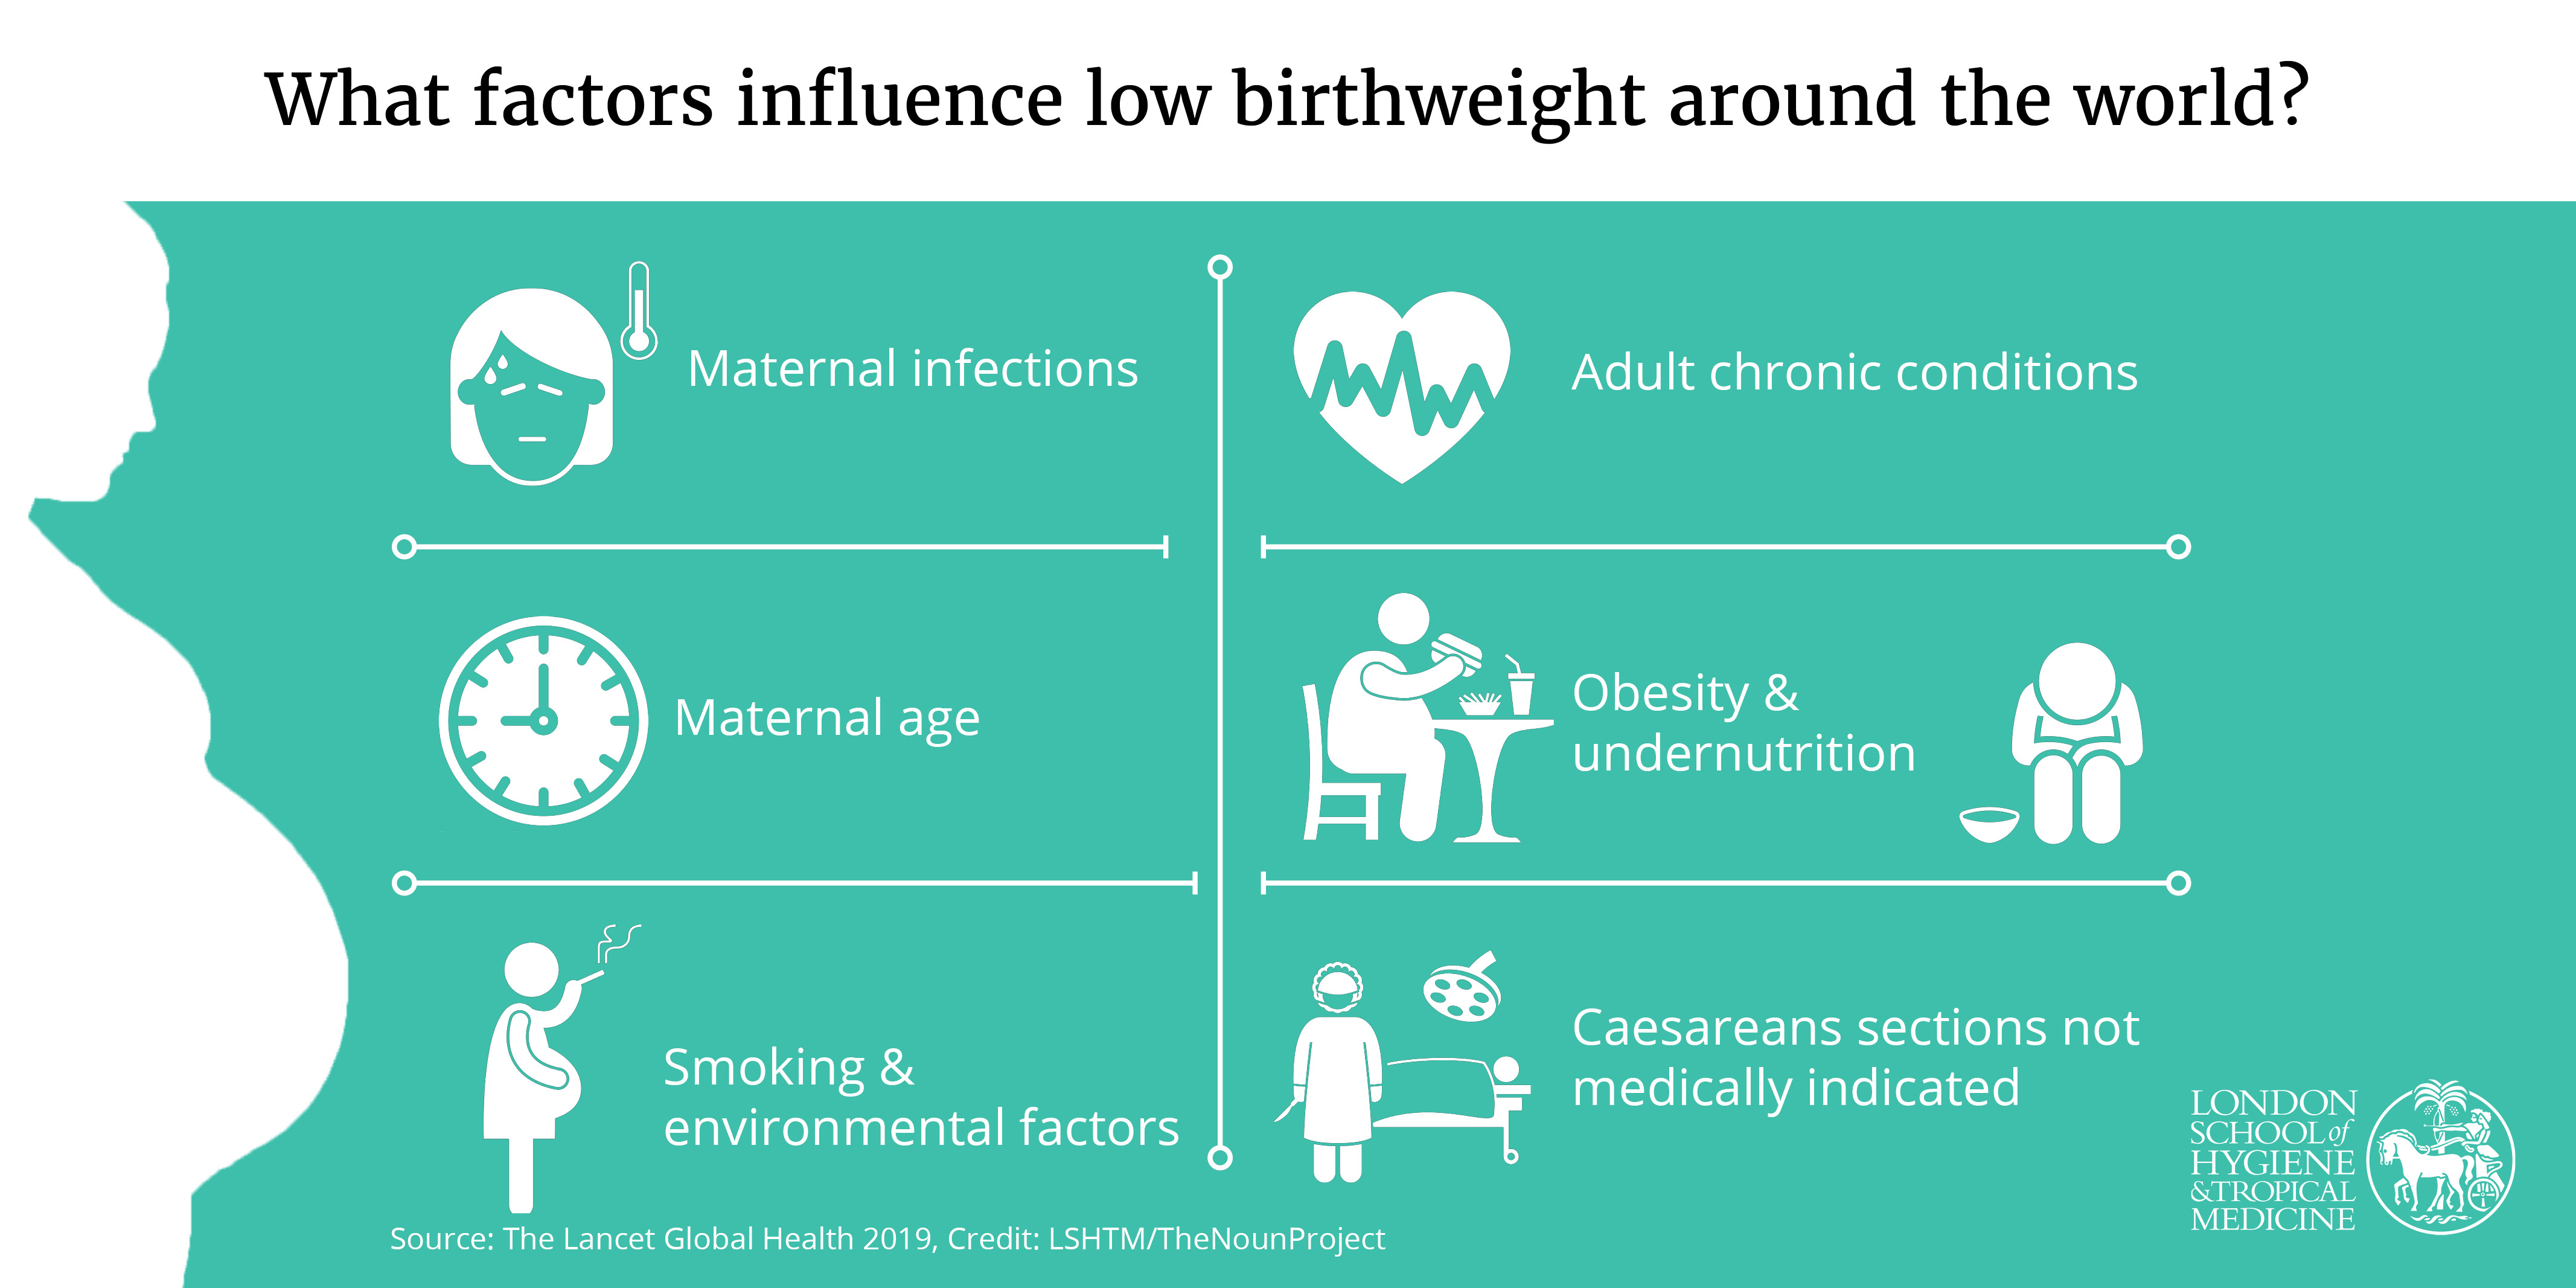 Factors that influence low birthweight around the world